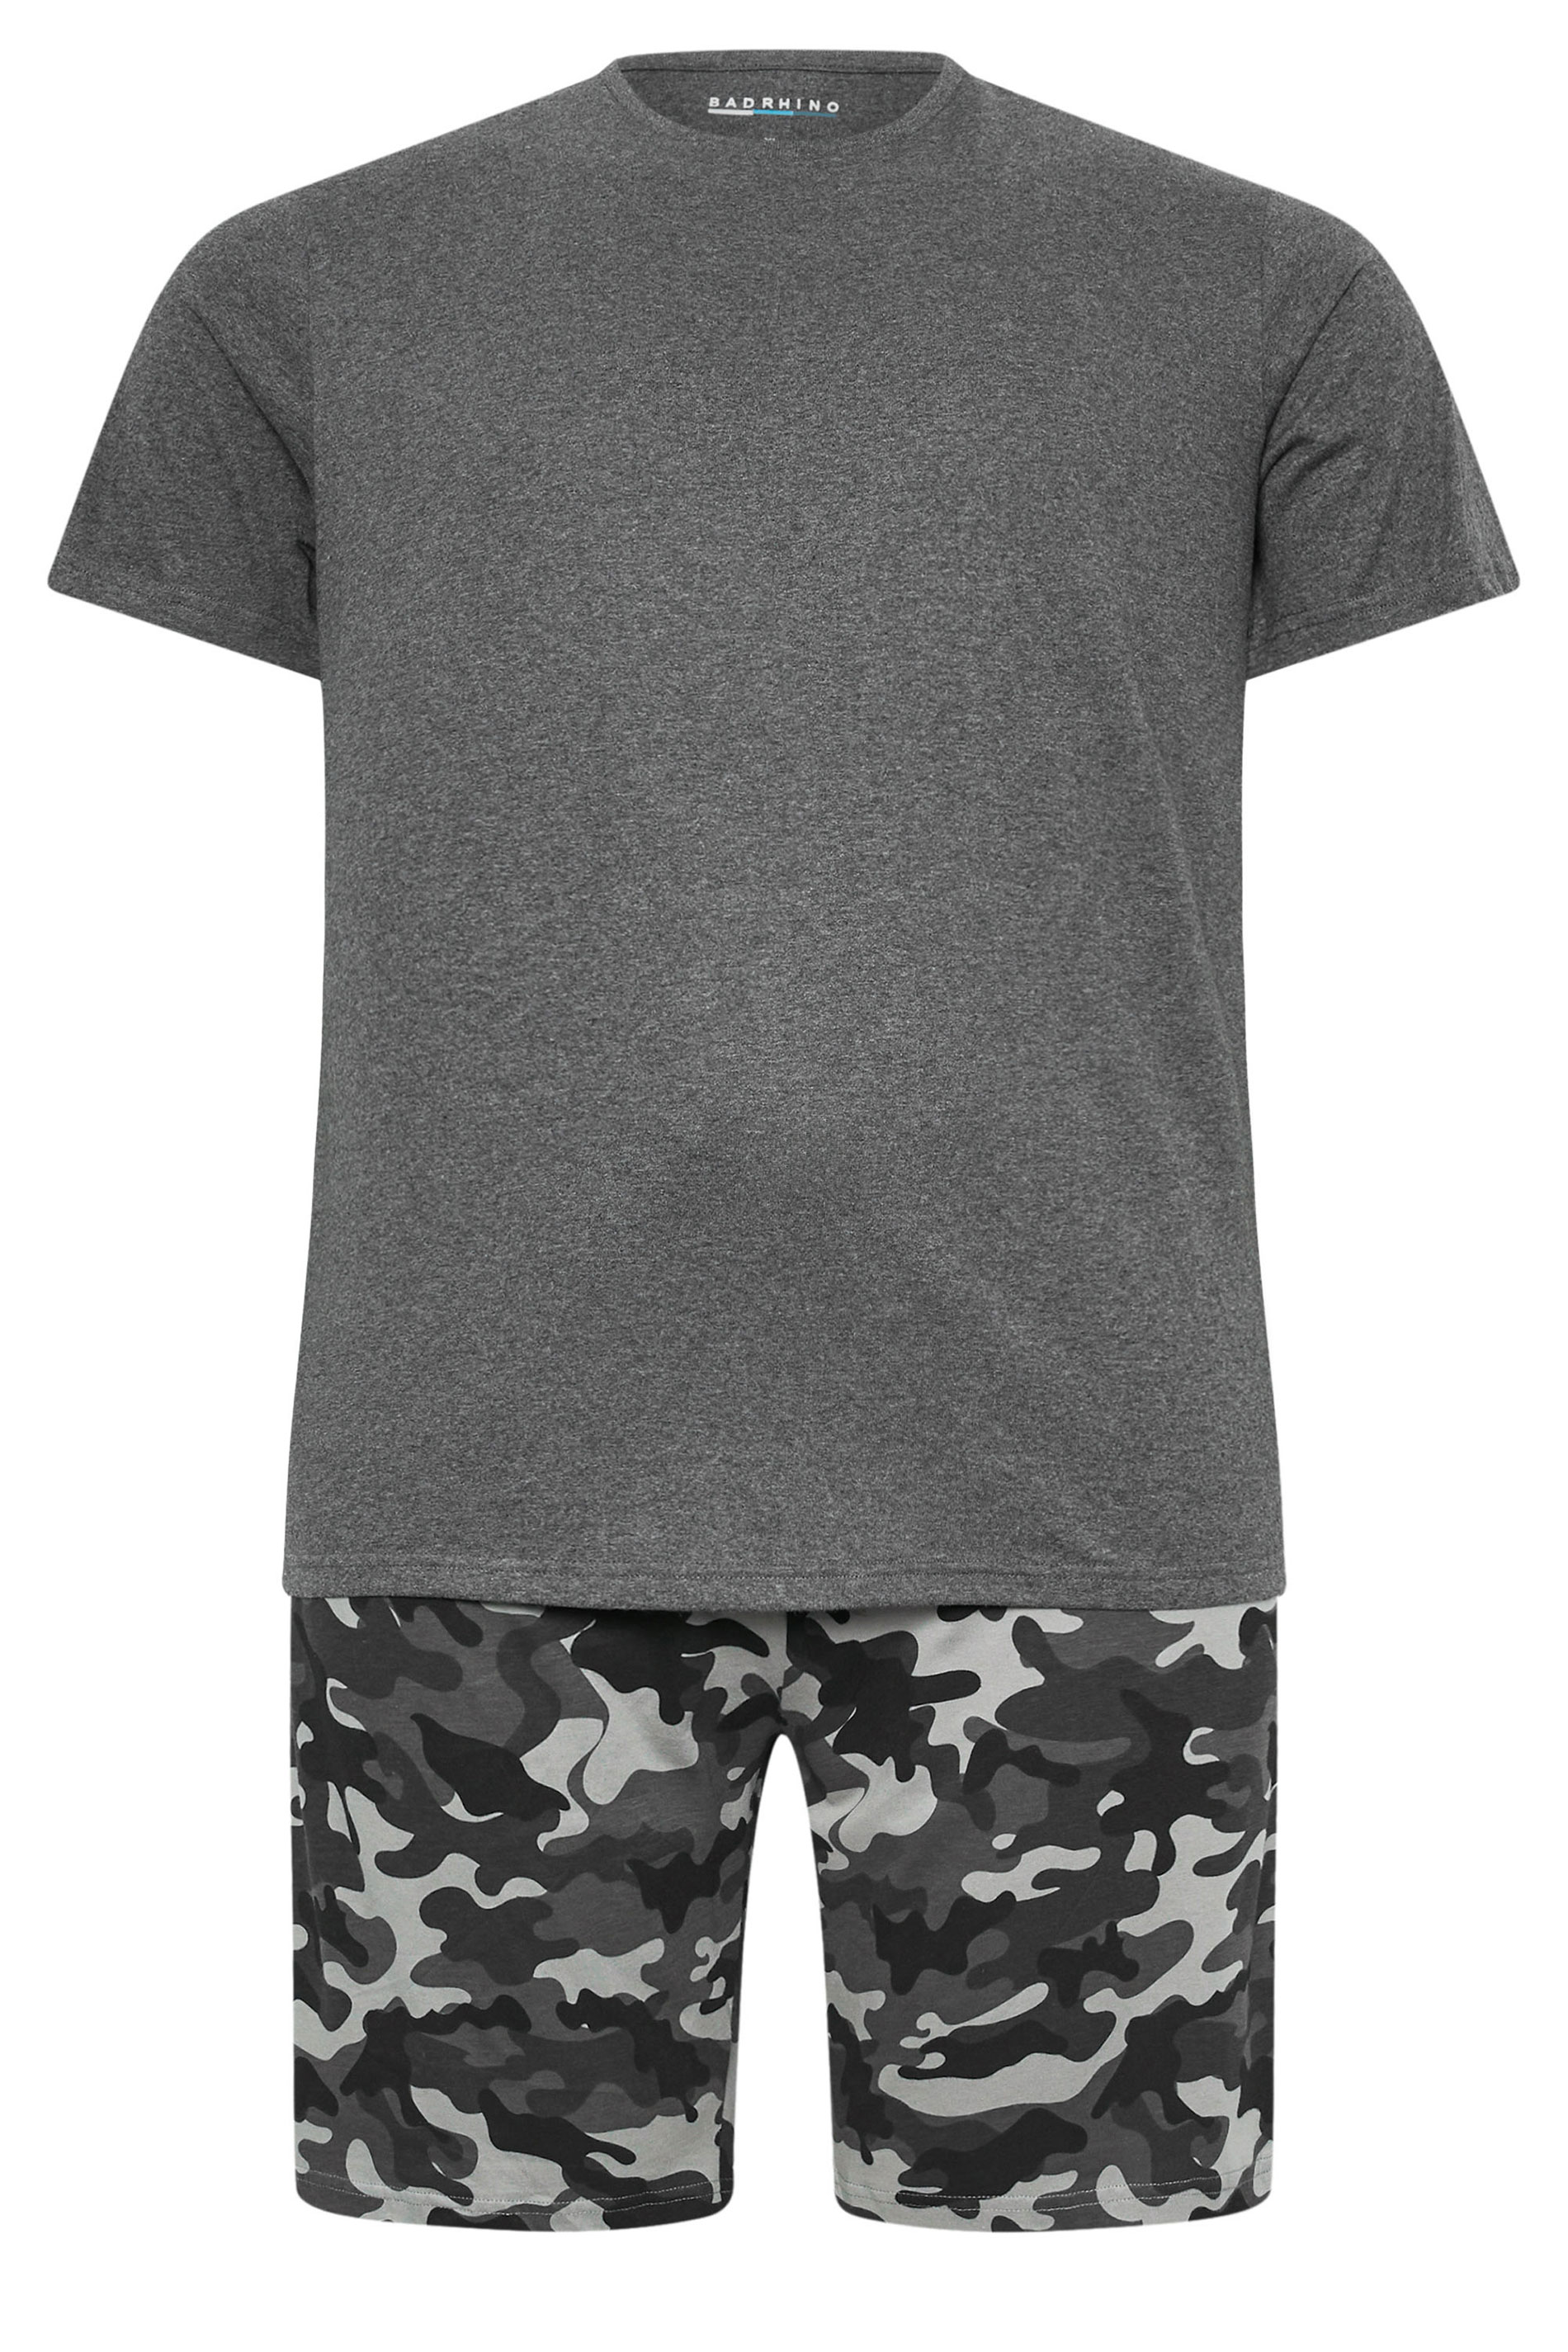 BadRhino Big & Tall Grey Camo Print Shorts and T-Shirt Pyjama Set | BadRhino 1